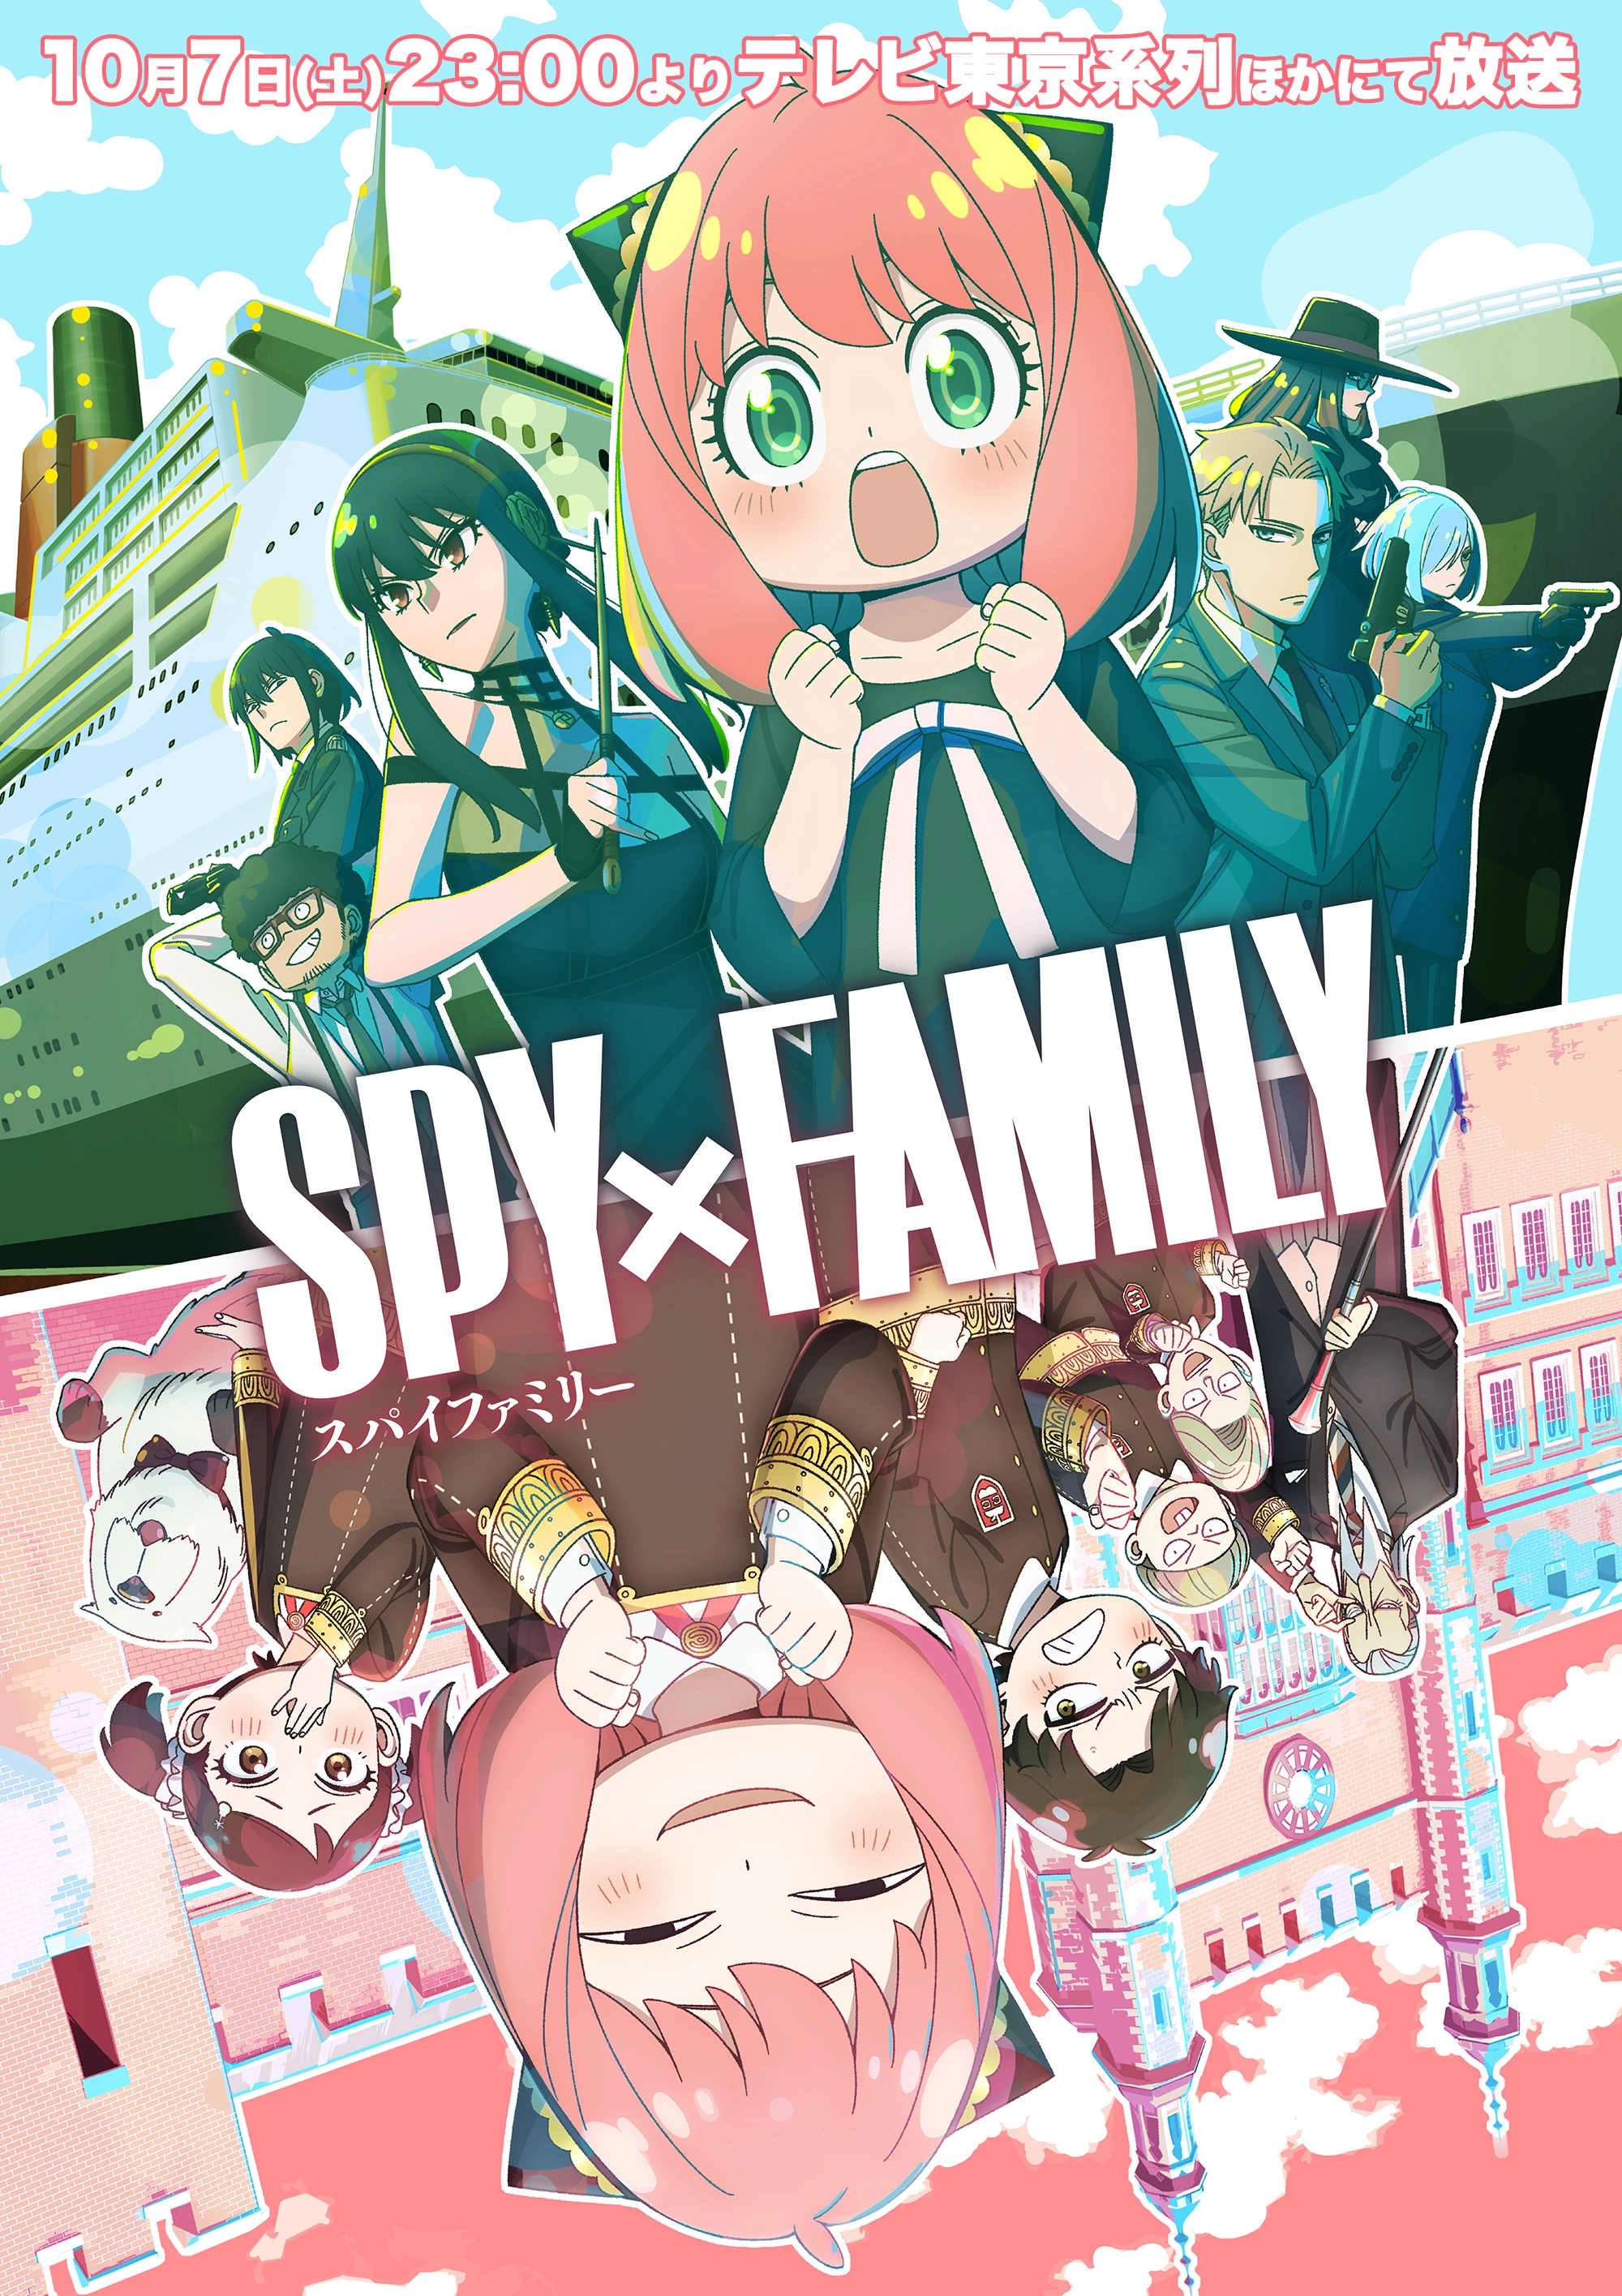 Fecha de estreno del anime SPY x FAMILY temporada 2